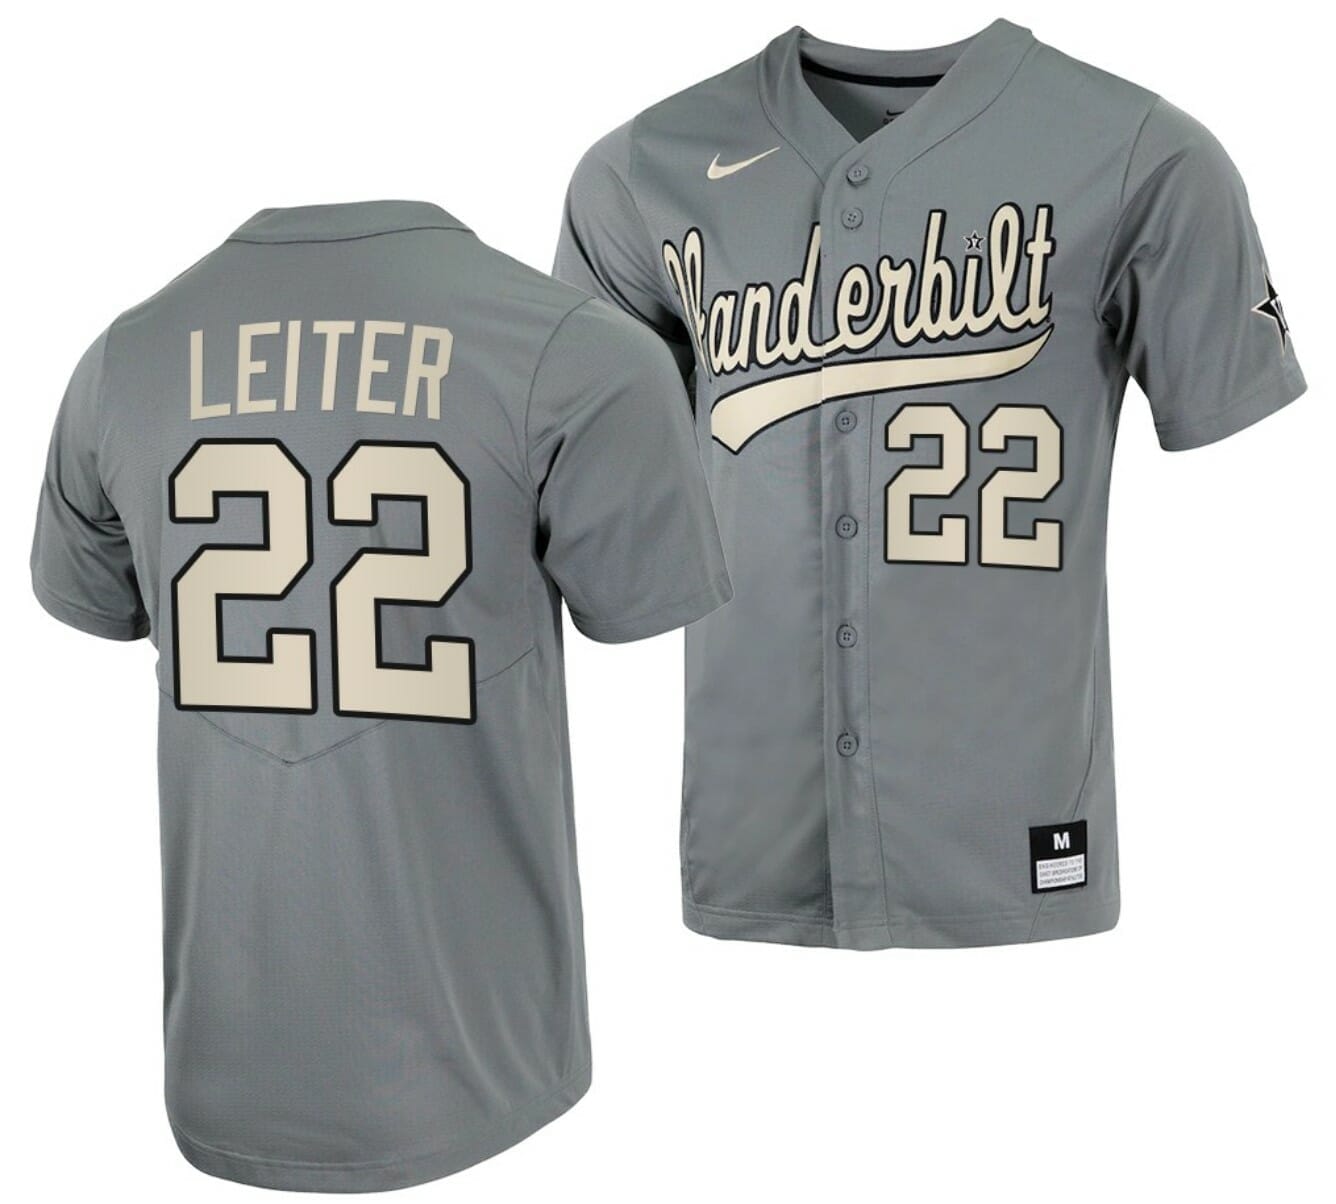 Available] Get New Jack Leiter Jersey Vanderbilt Grey #22